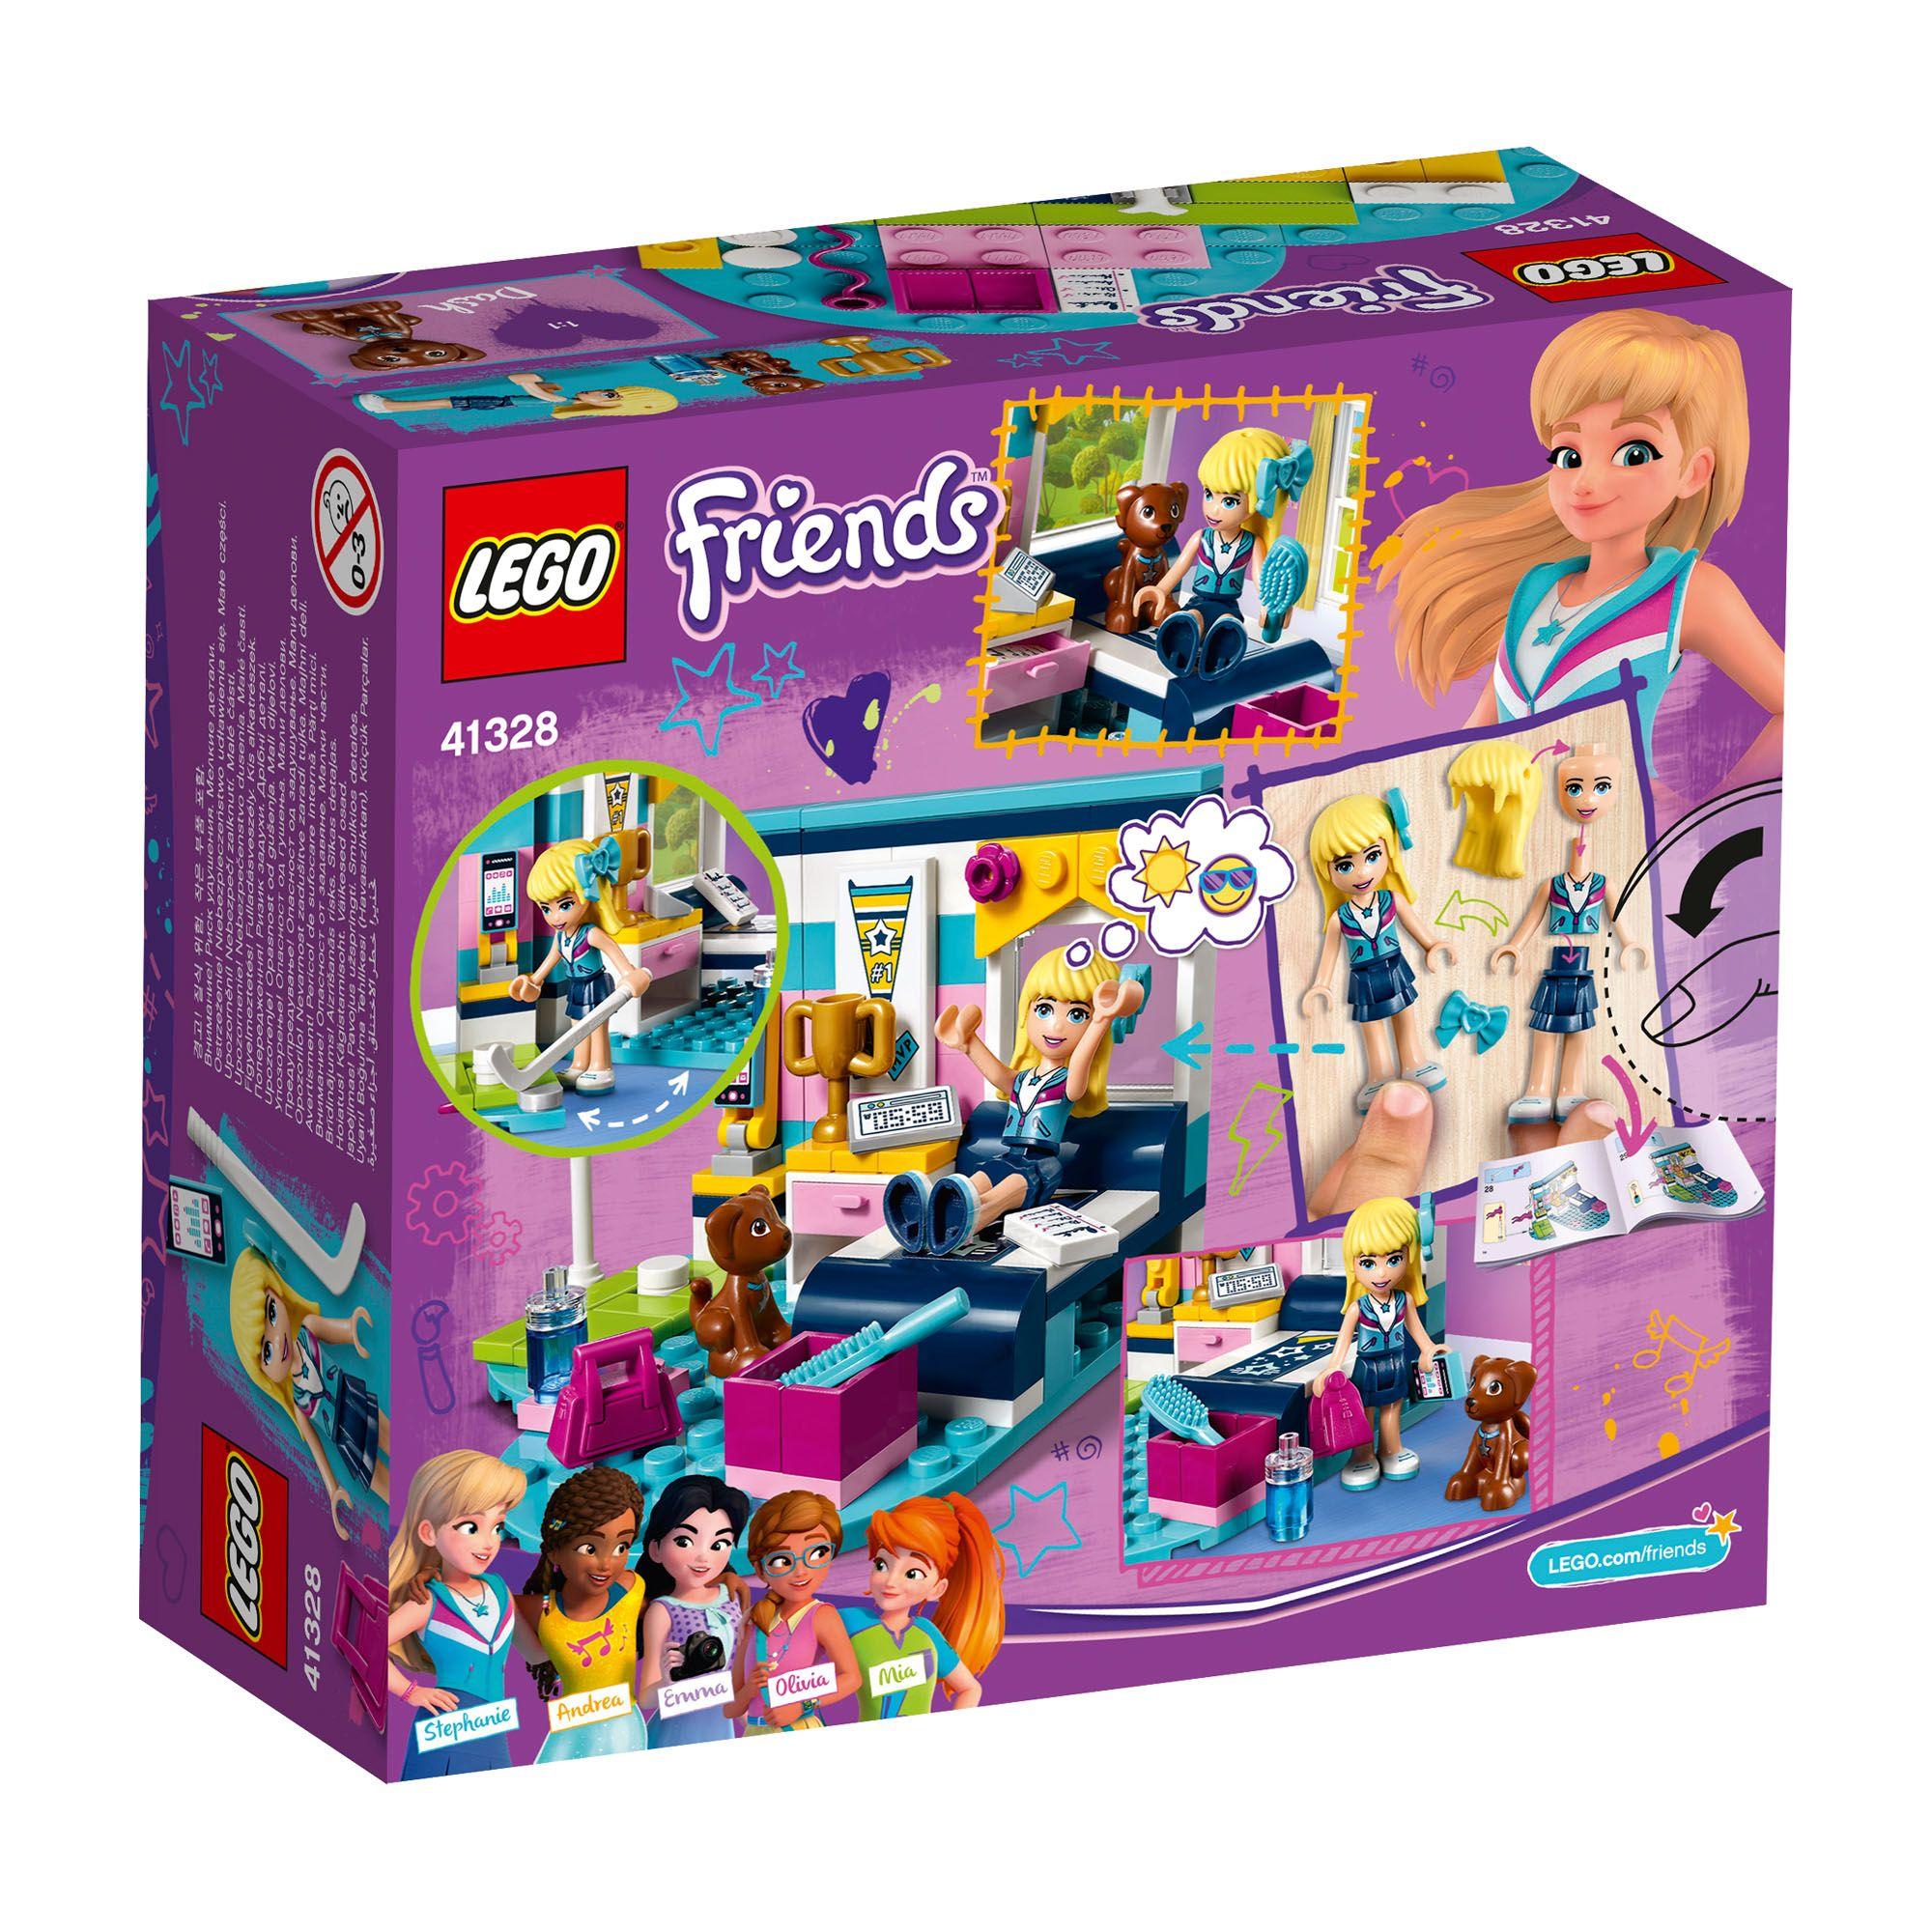 LEGO Friends Logo - 41328 LEGO Friends Stephanie's Bedroom 95 Pieces Age 6+ New Release ...